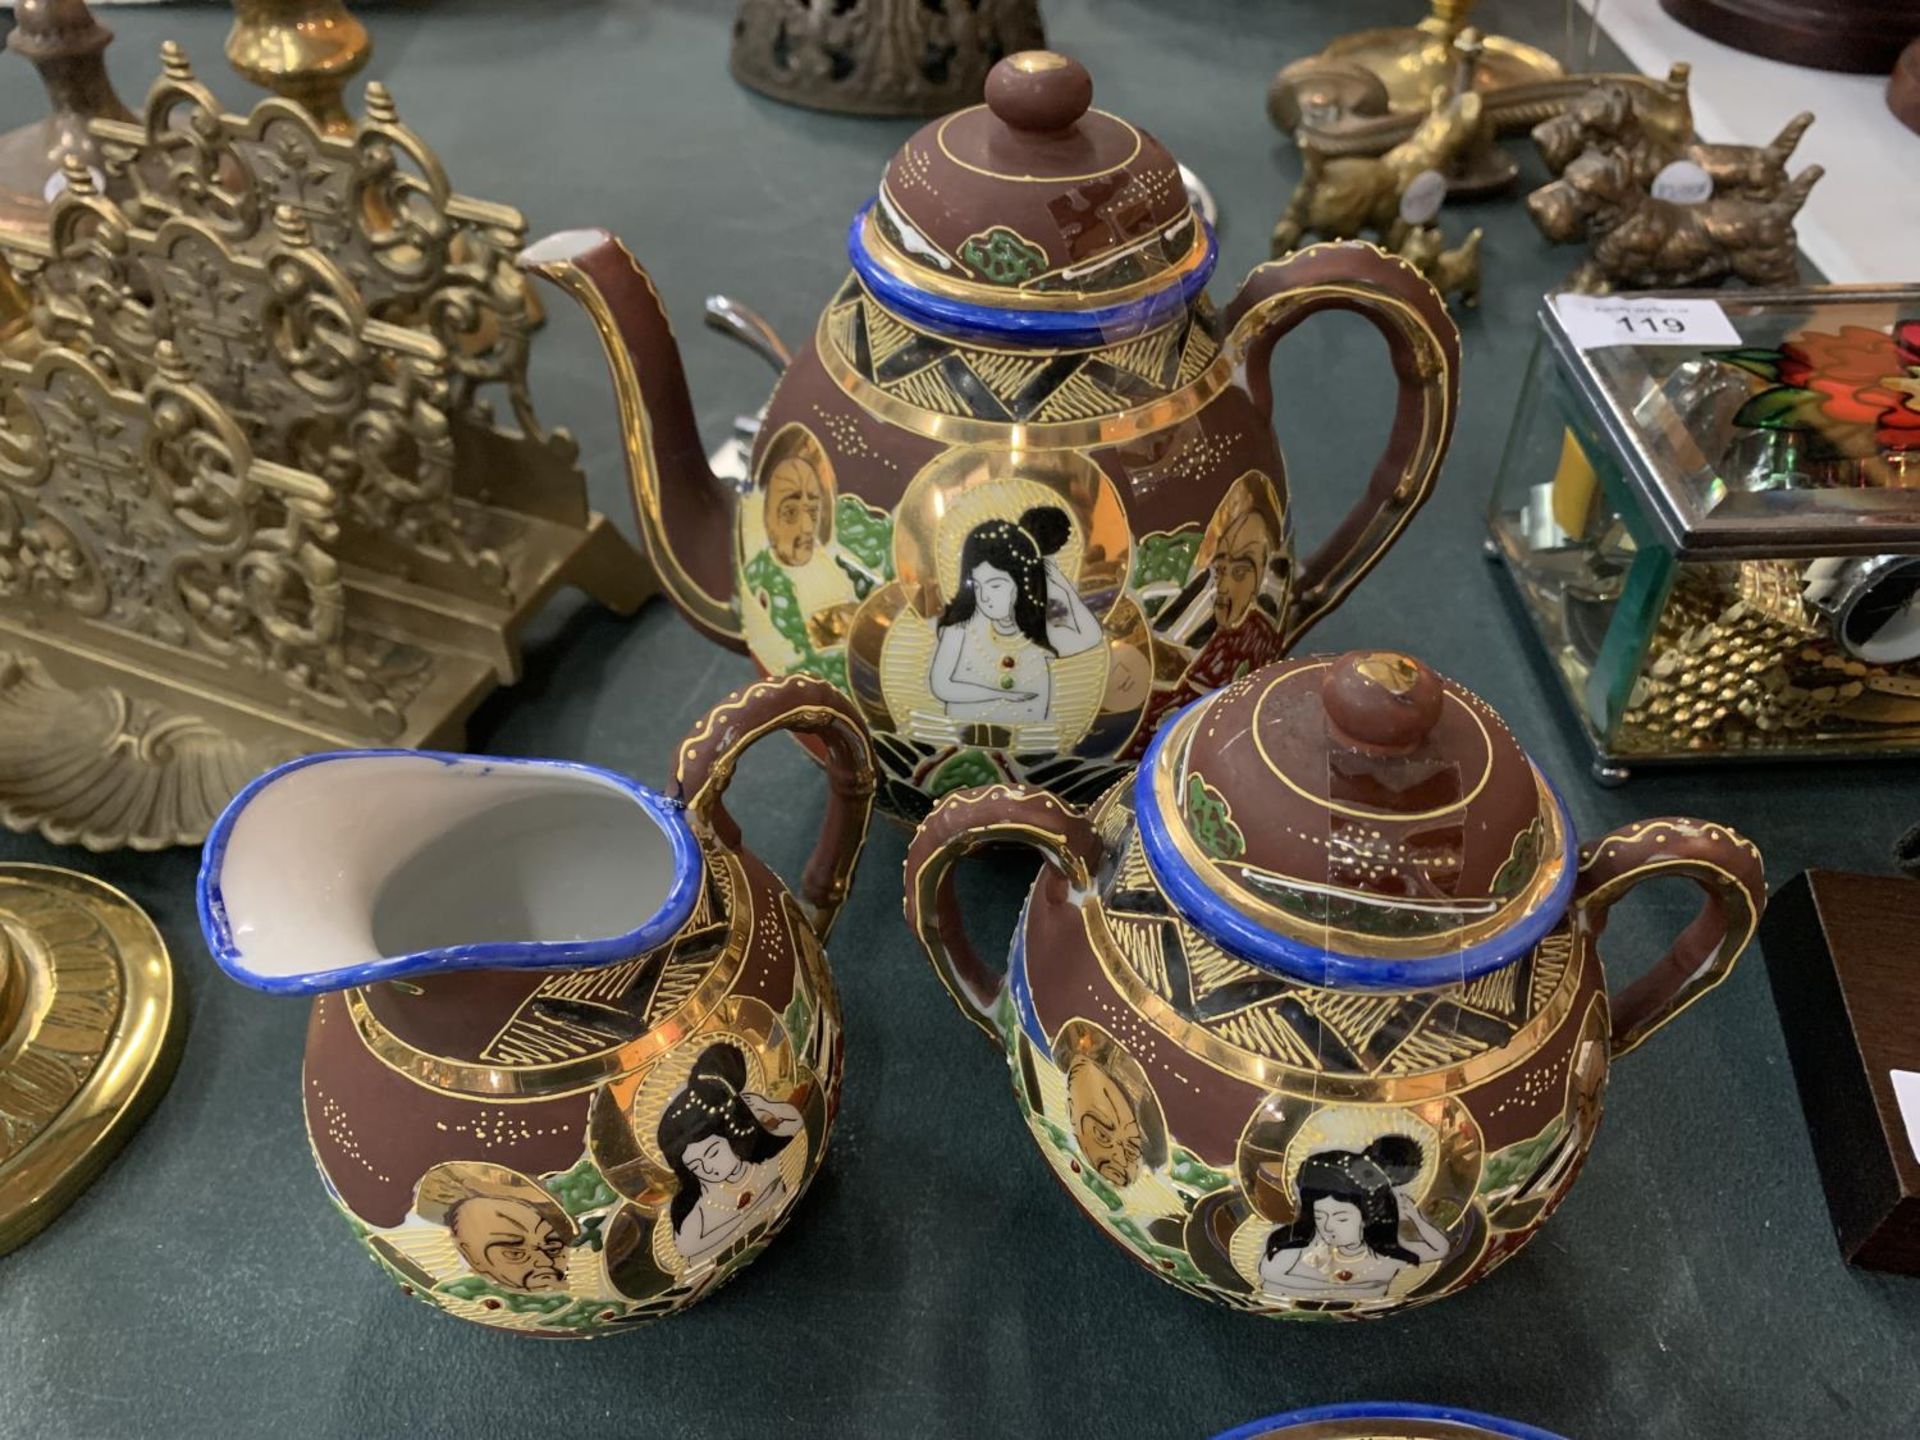 AN ORIENTAL SATSUMA TEA SET TO INCLUDE A TEAPOT, JUG, SUGAR BOWL AND FOUR CUPS AND SAUCERS - Image 2 of 3